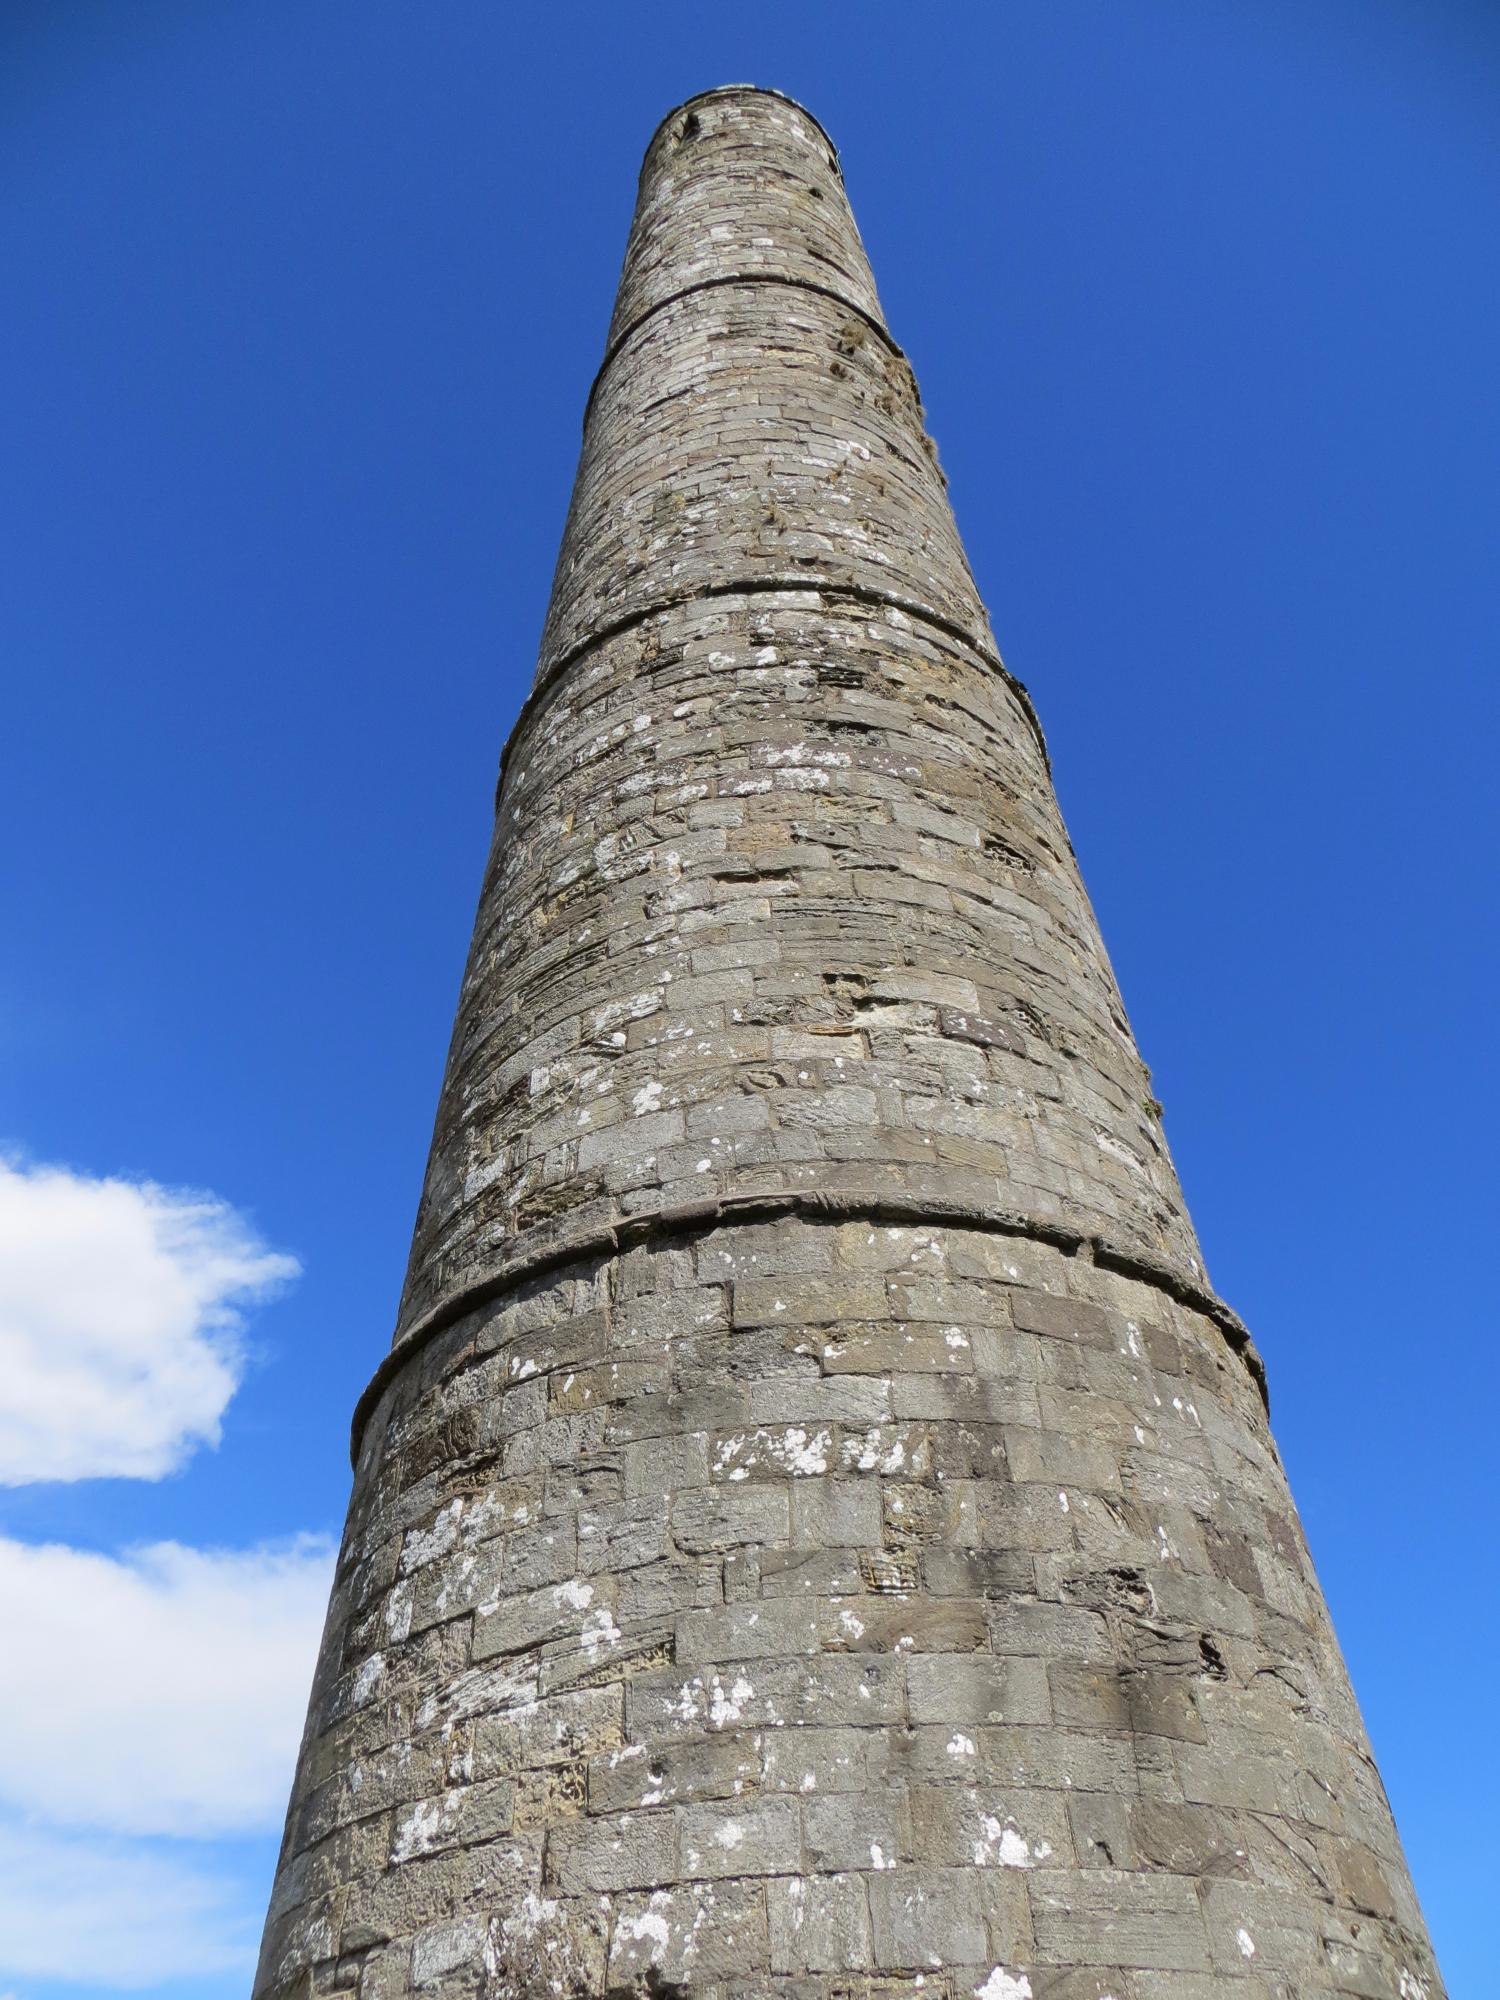 Round tower. Круглые башни Ирландии. Башня с круглой вершиной. Страшные круглые башни. Antrim Round Tower.